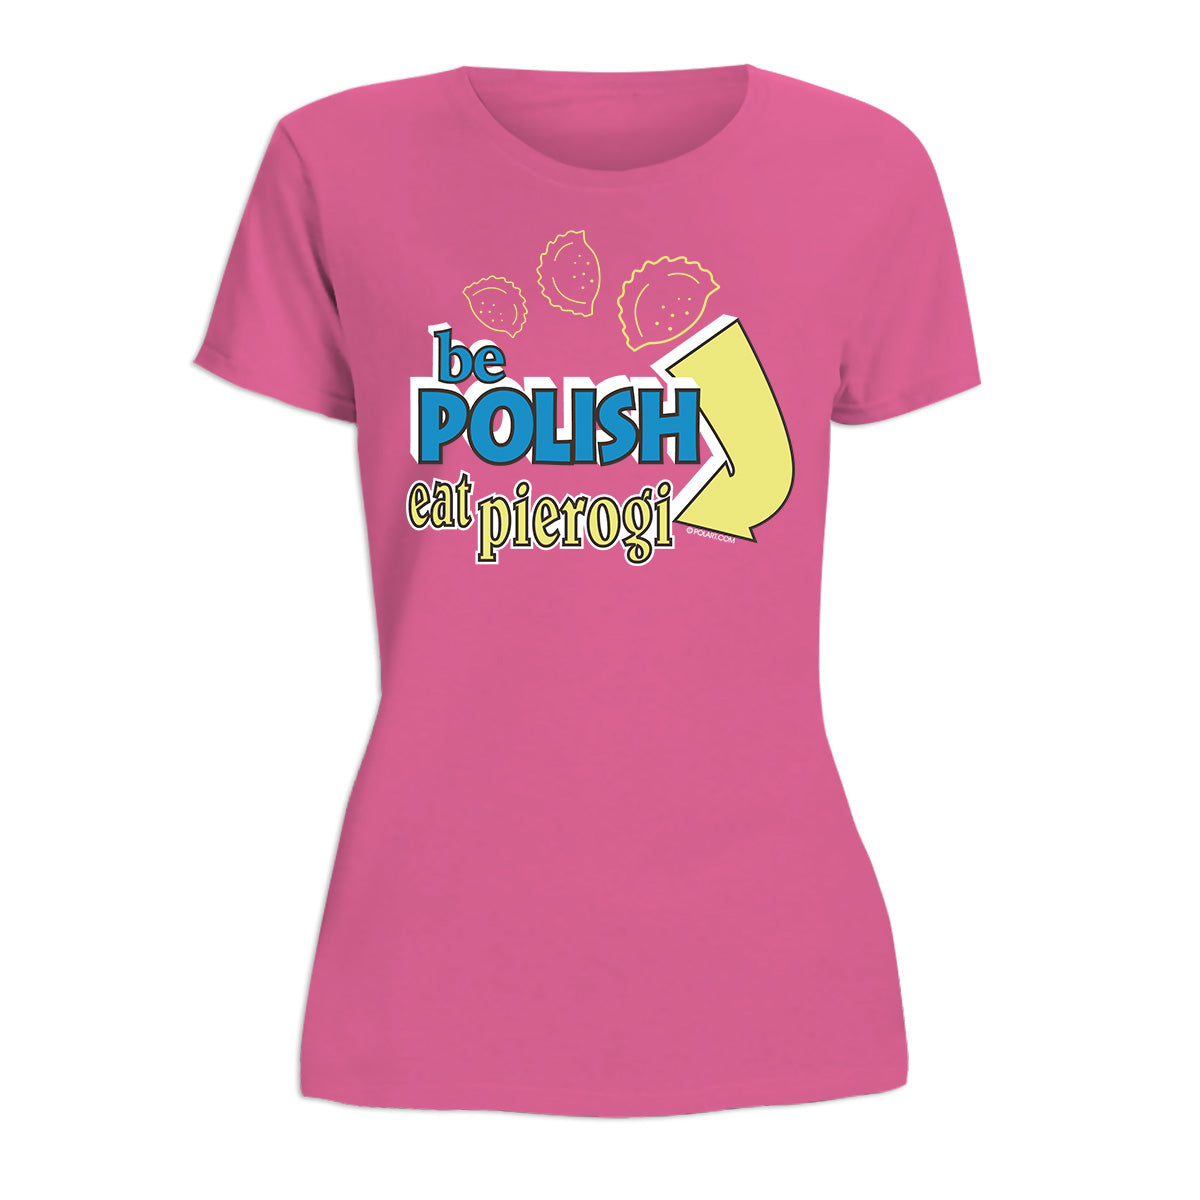 Be Polish Eat Pierogi Women's Short Sleeve Tshirt